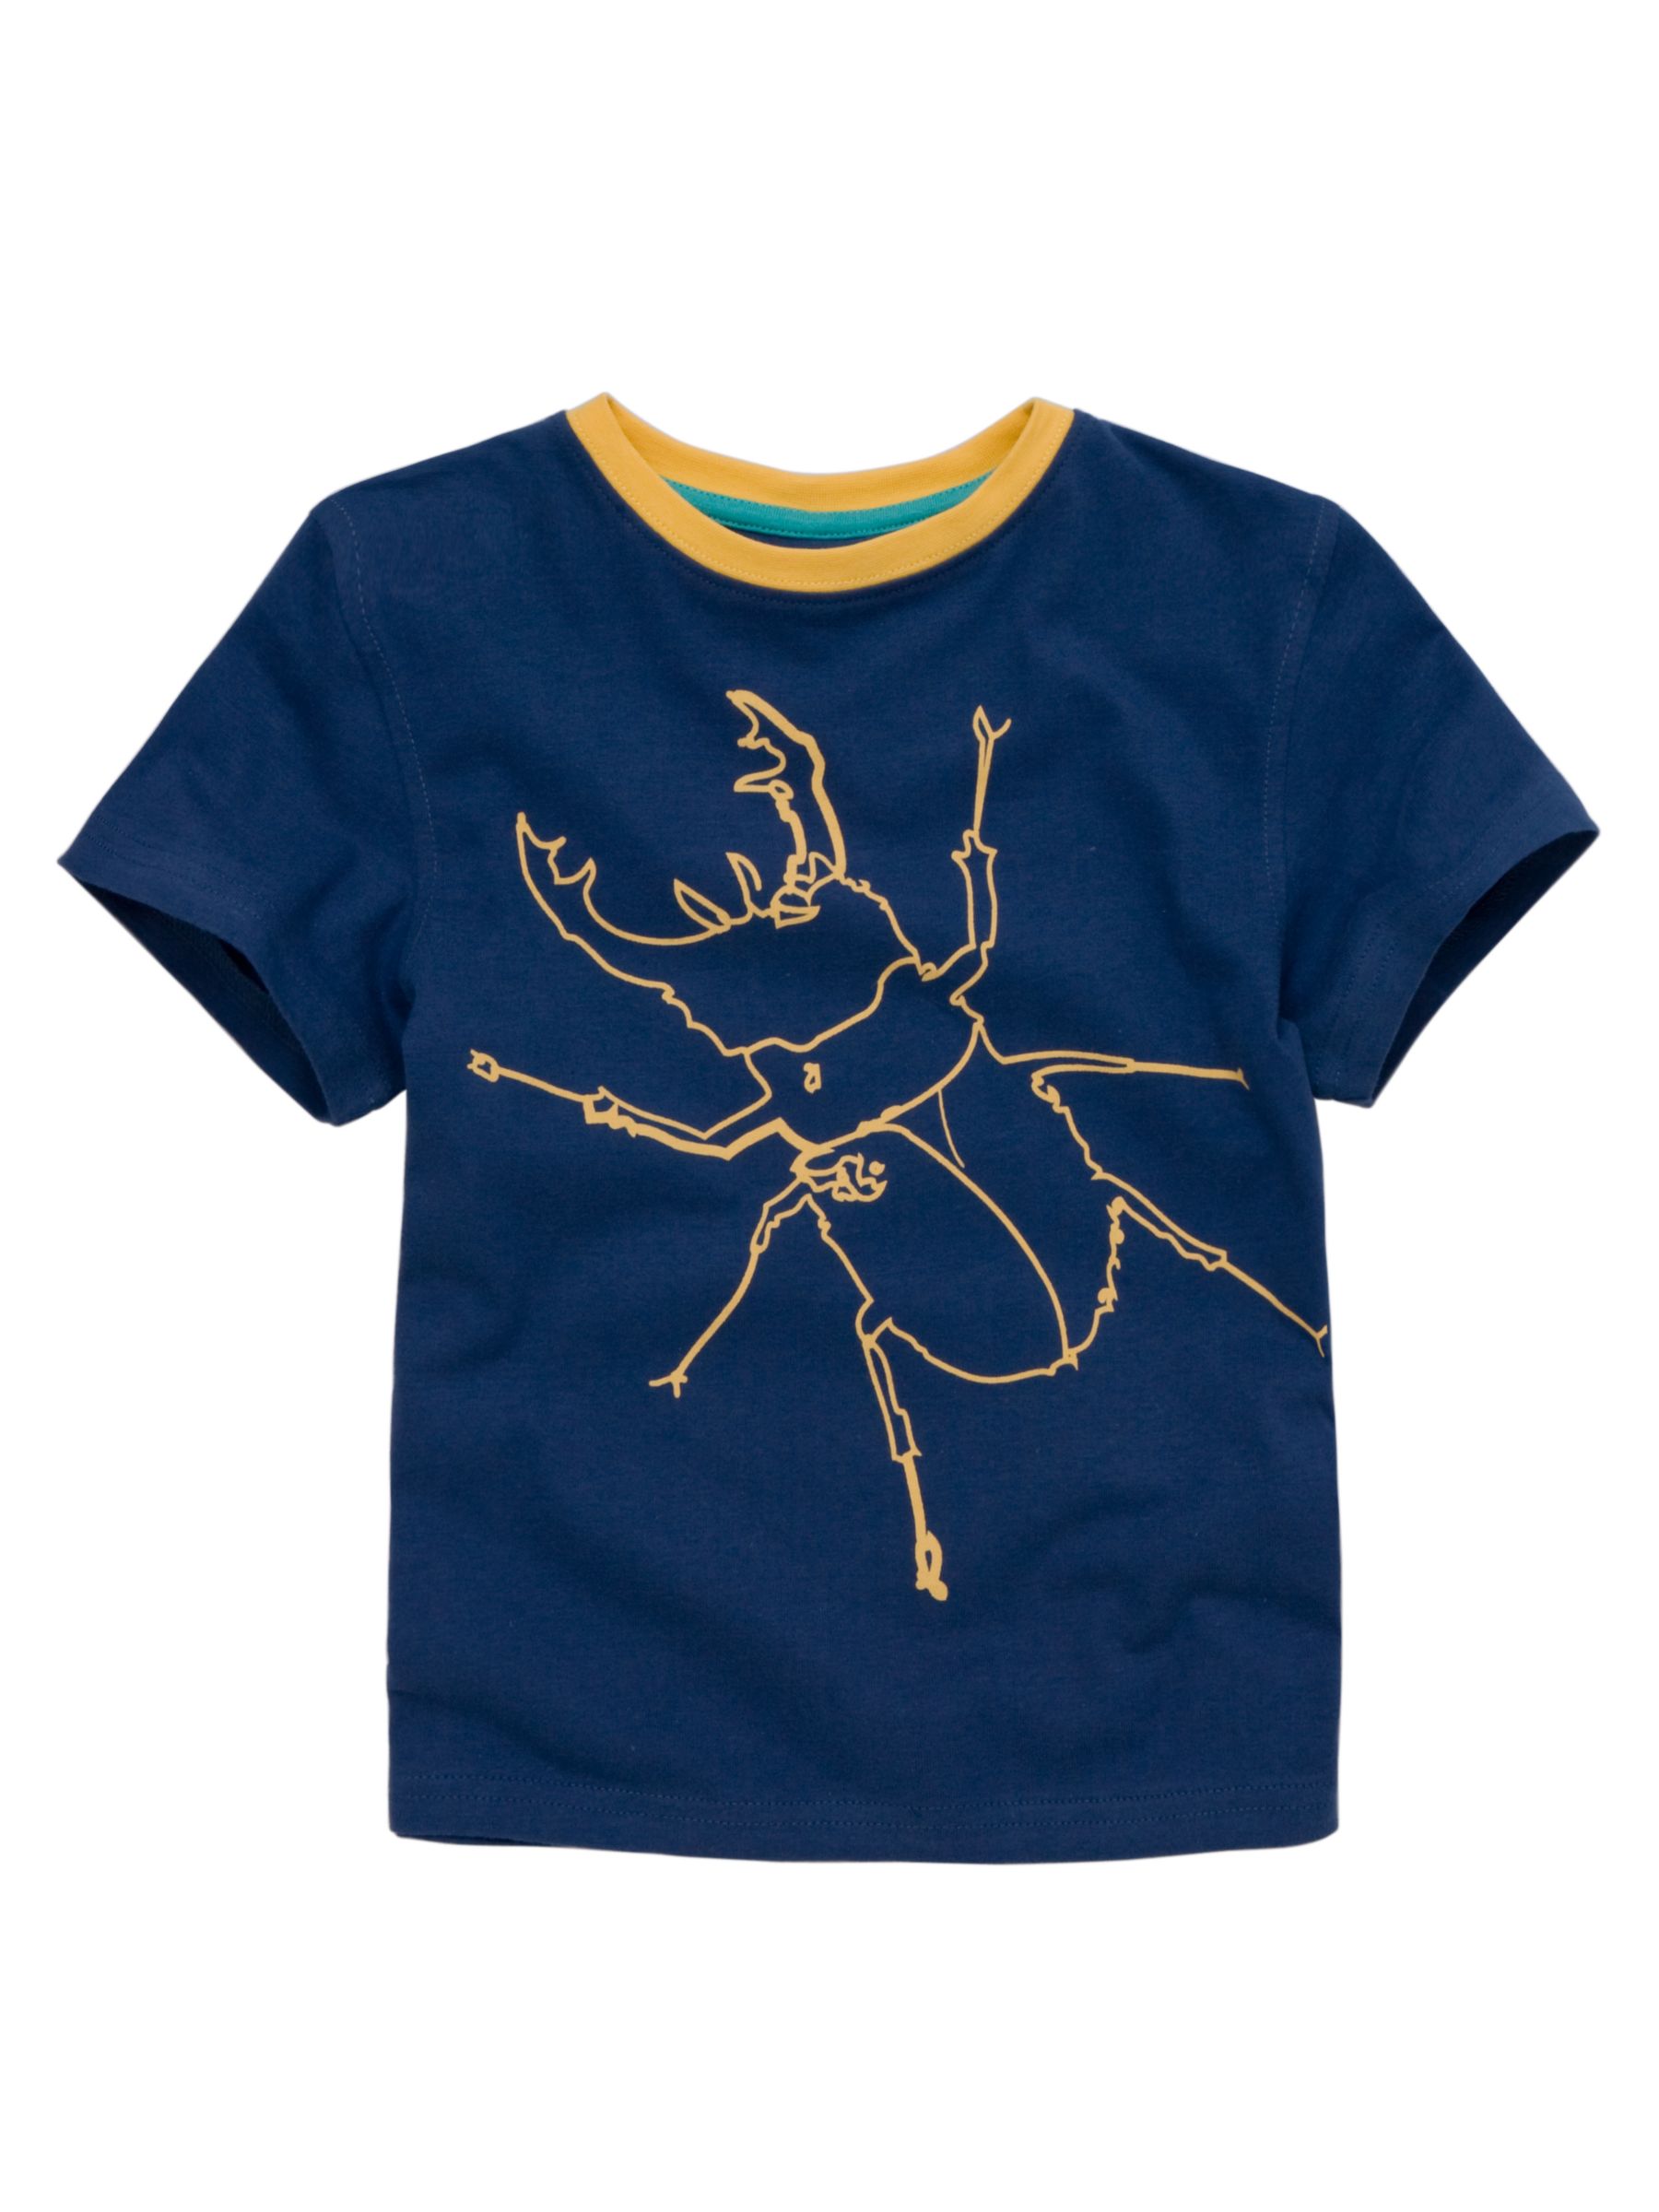 John Lewis Boy Beetle T-Shirt, Navy blue, 2 years